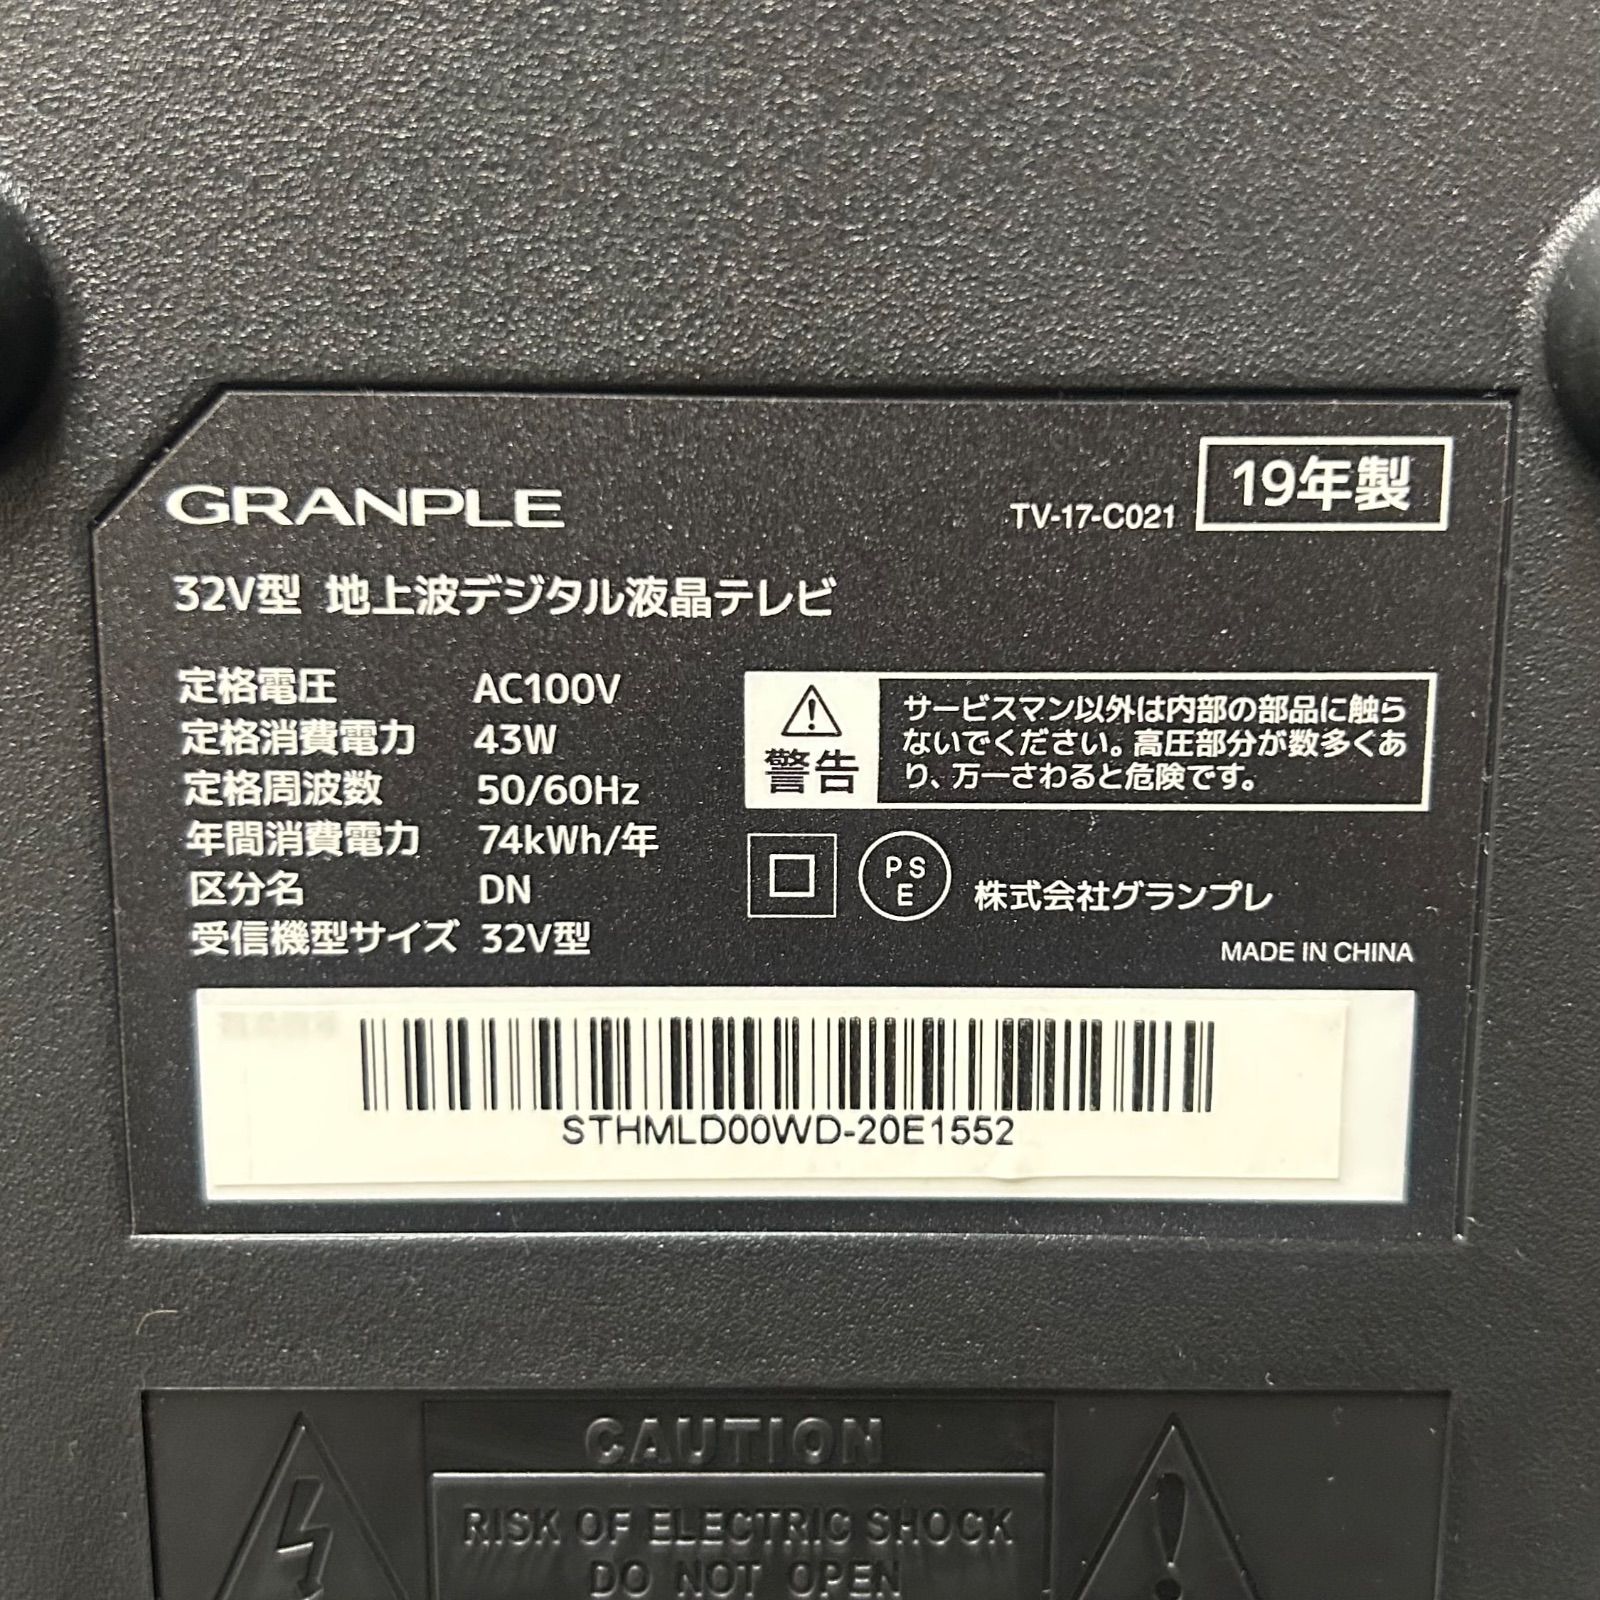 rg0197 グランプレ 液晶テレビ TV-17-C011 32インチ STAYER GRANPLE ...